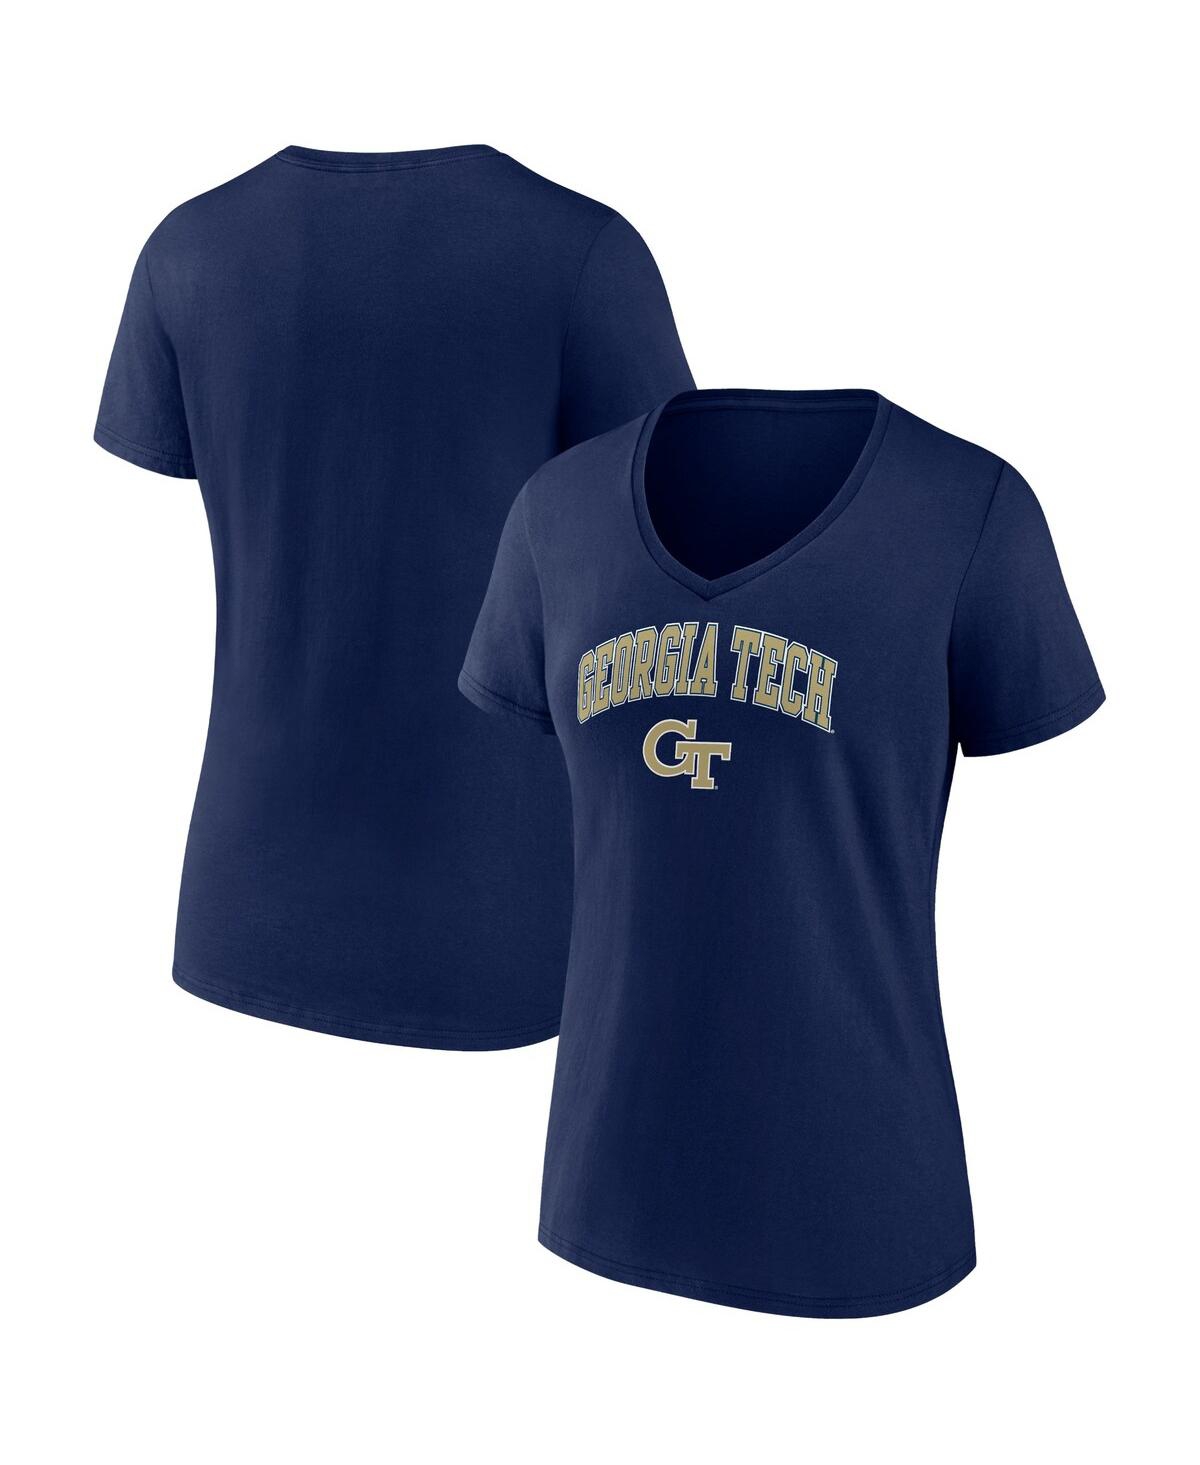 Fanatics Women's  Navy Georgia Tech Yellow Jackets Evergreen Campus V-neck T-shirt